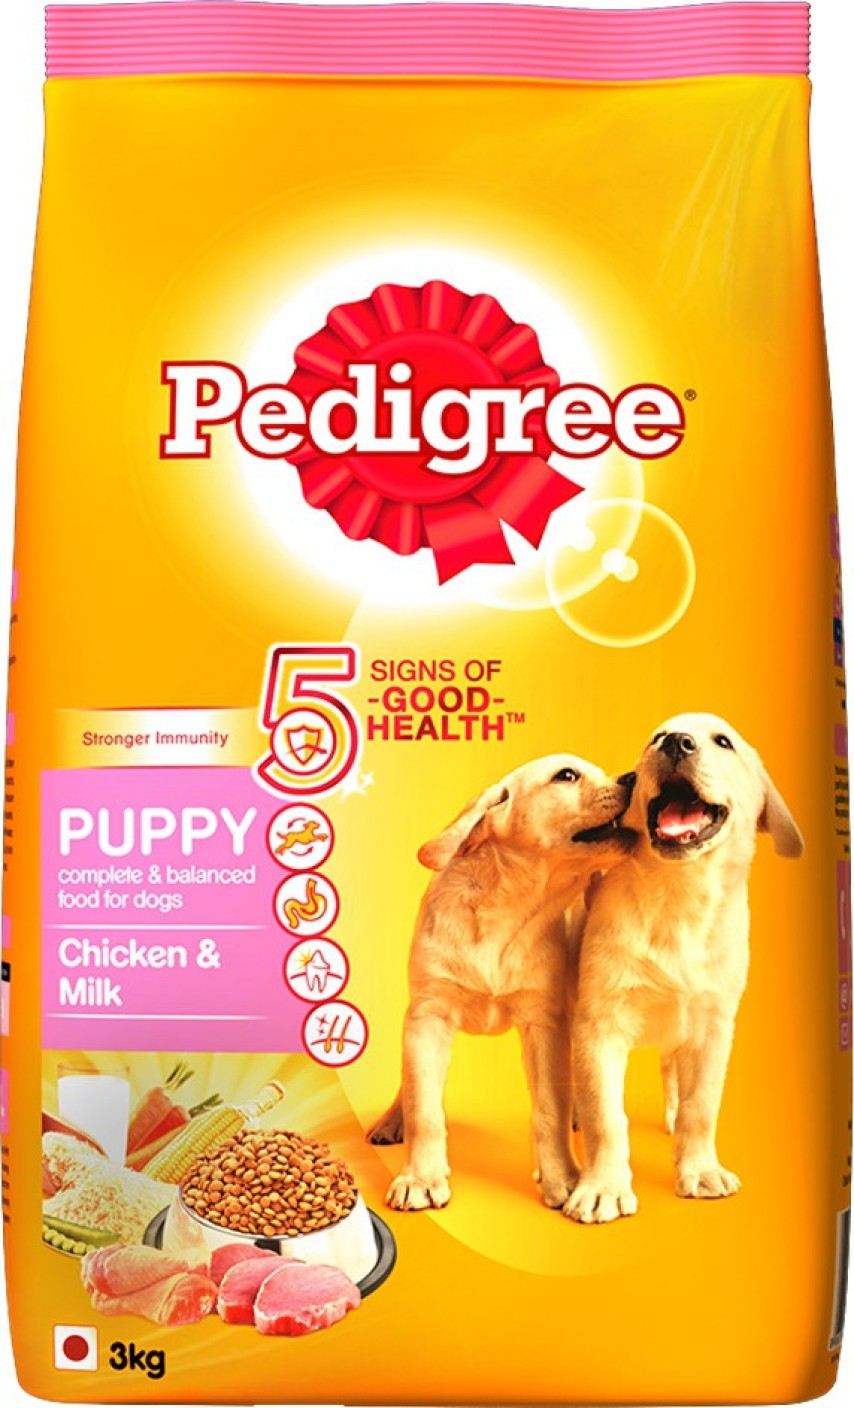 Pedigree Puppy Chicken, Milk Dog Food Price in India - Buy ...